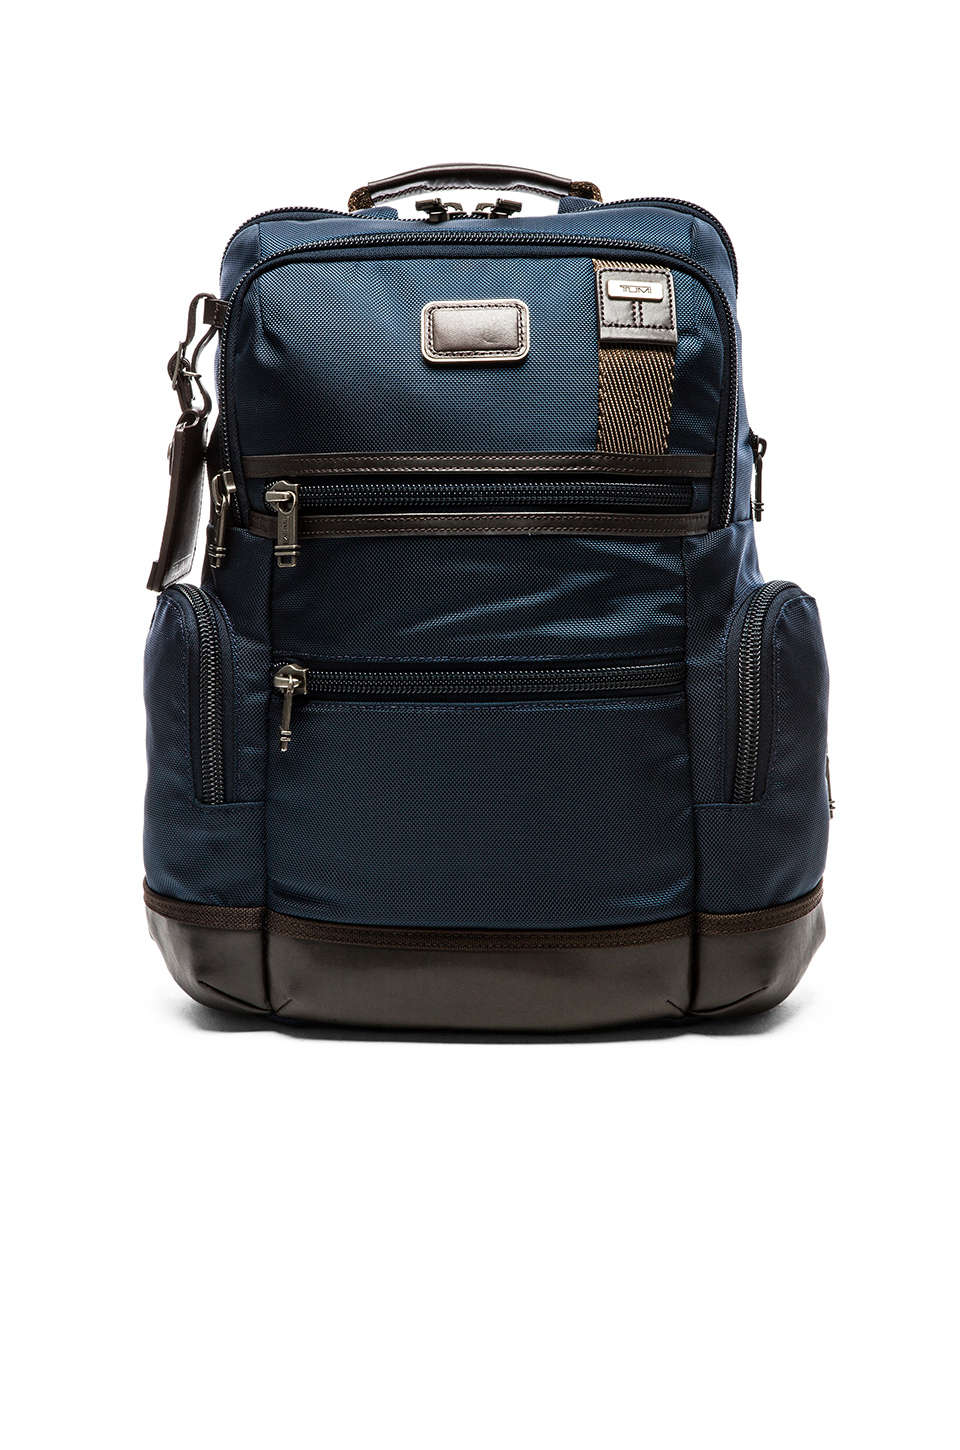 Lyst - Tumi Alpha Bravo Knox Backpack in Blue